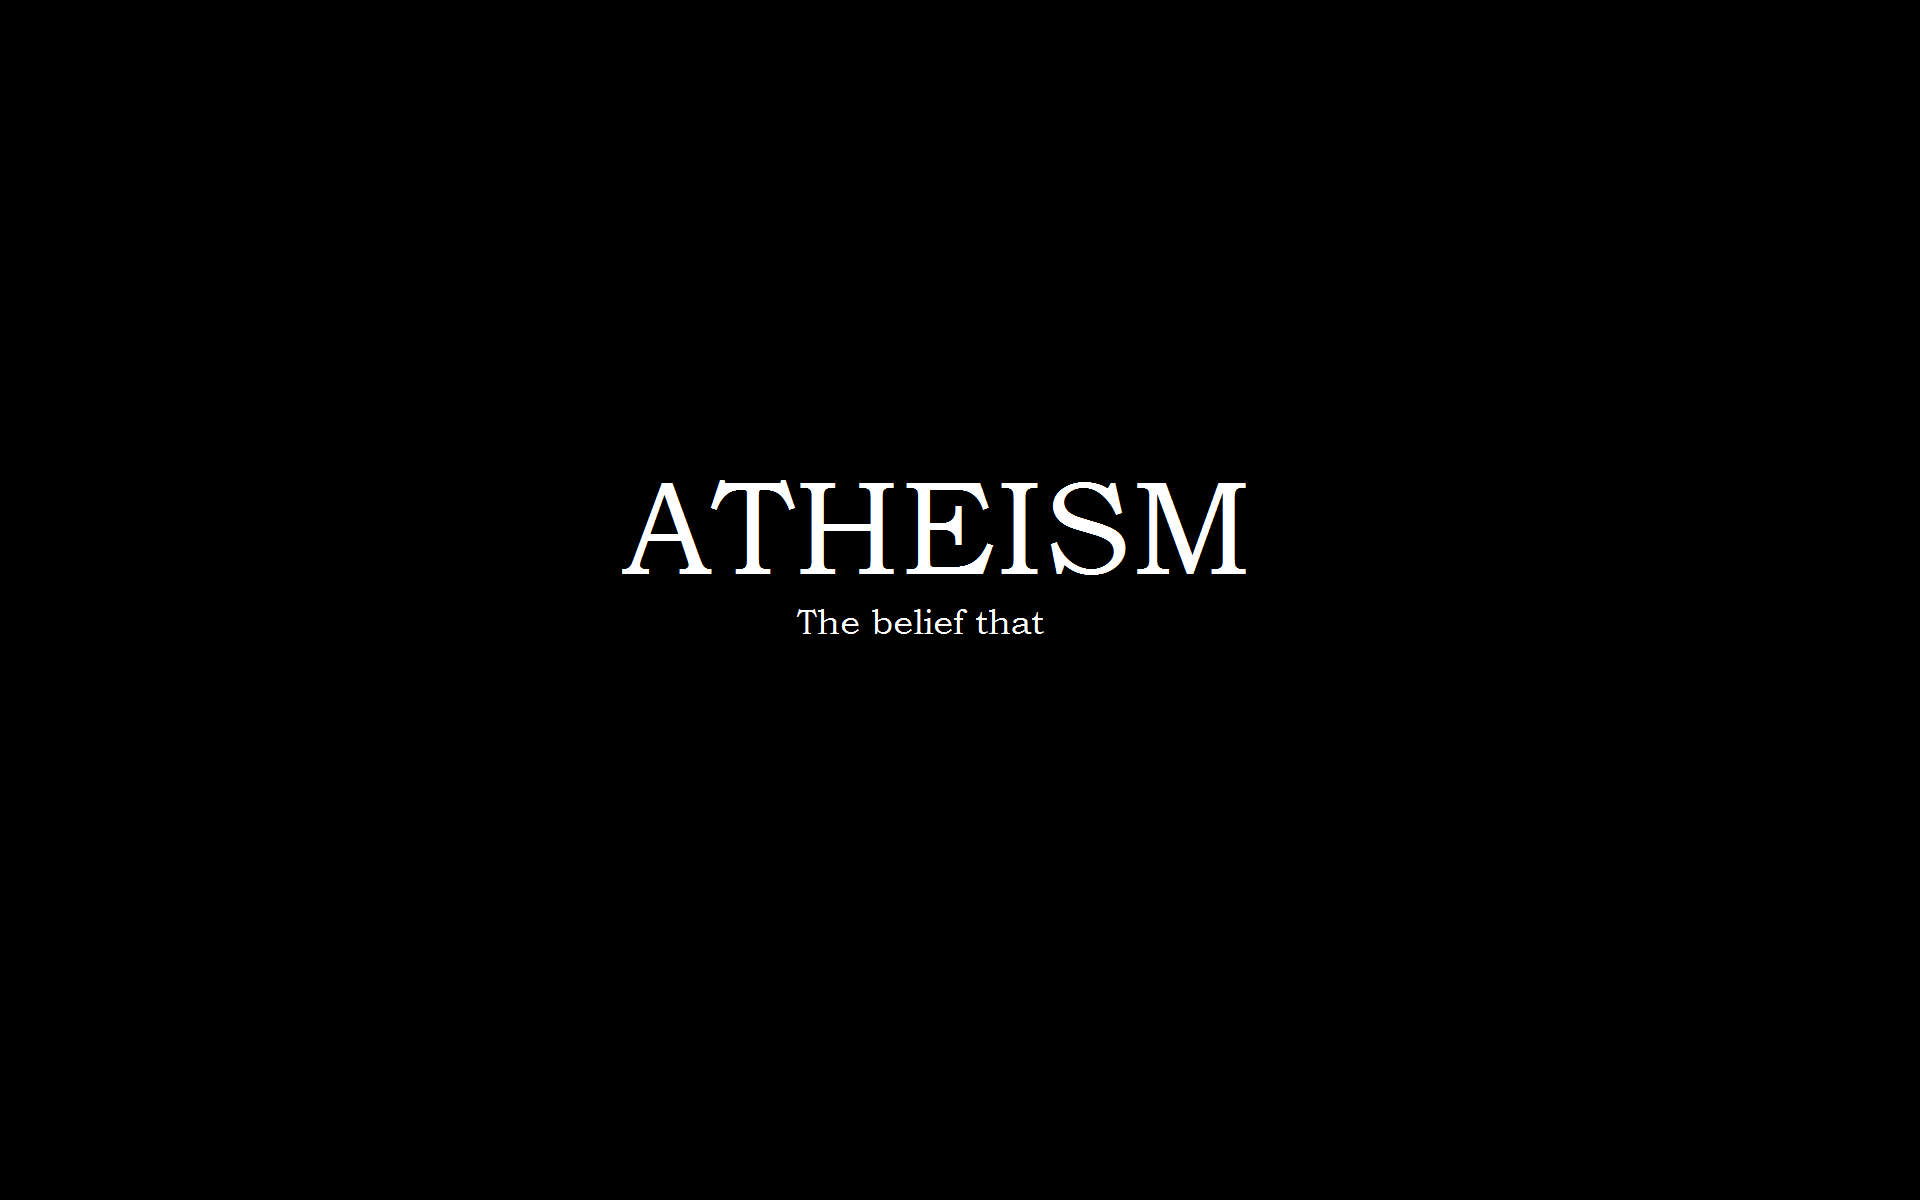 атеизм, лозунг, demotivational - обои на рабочий стол